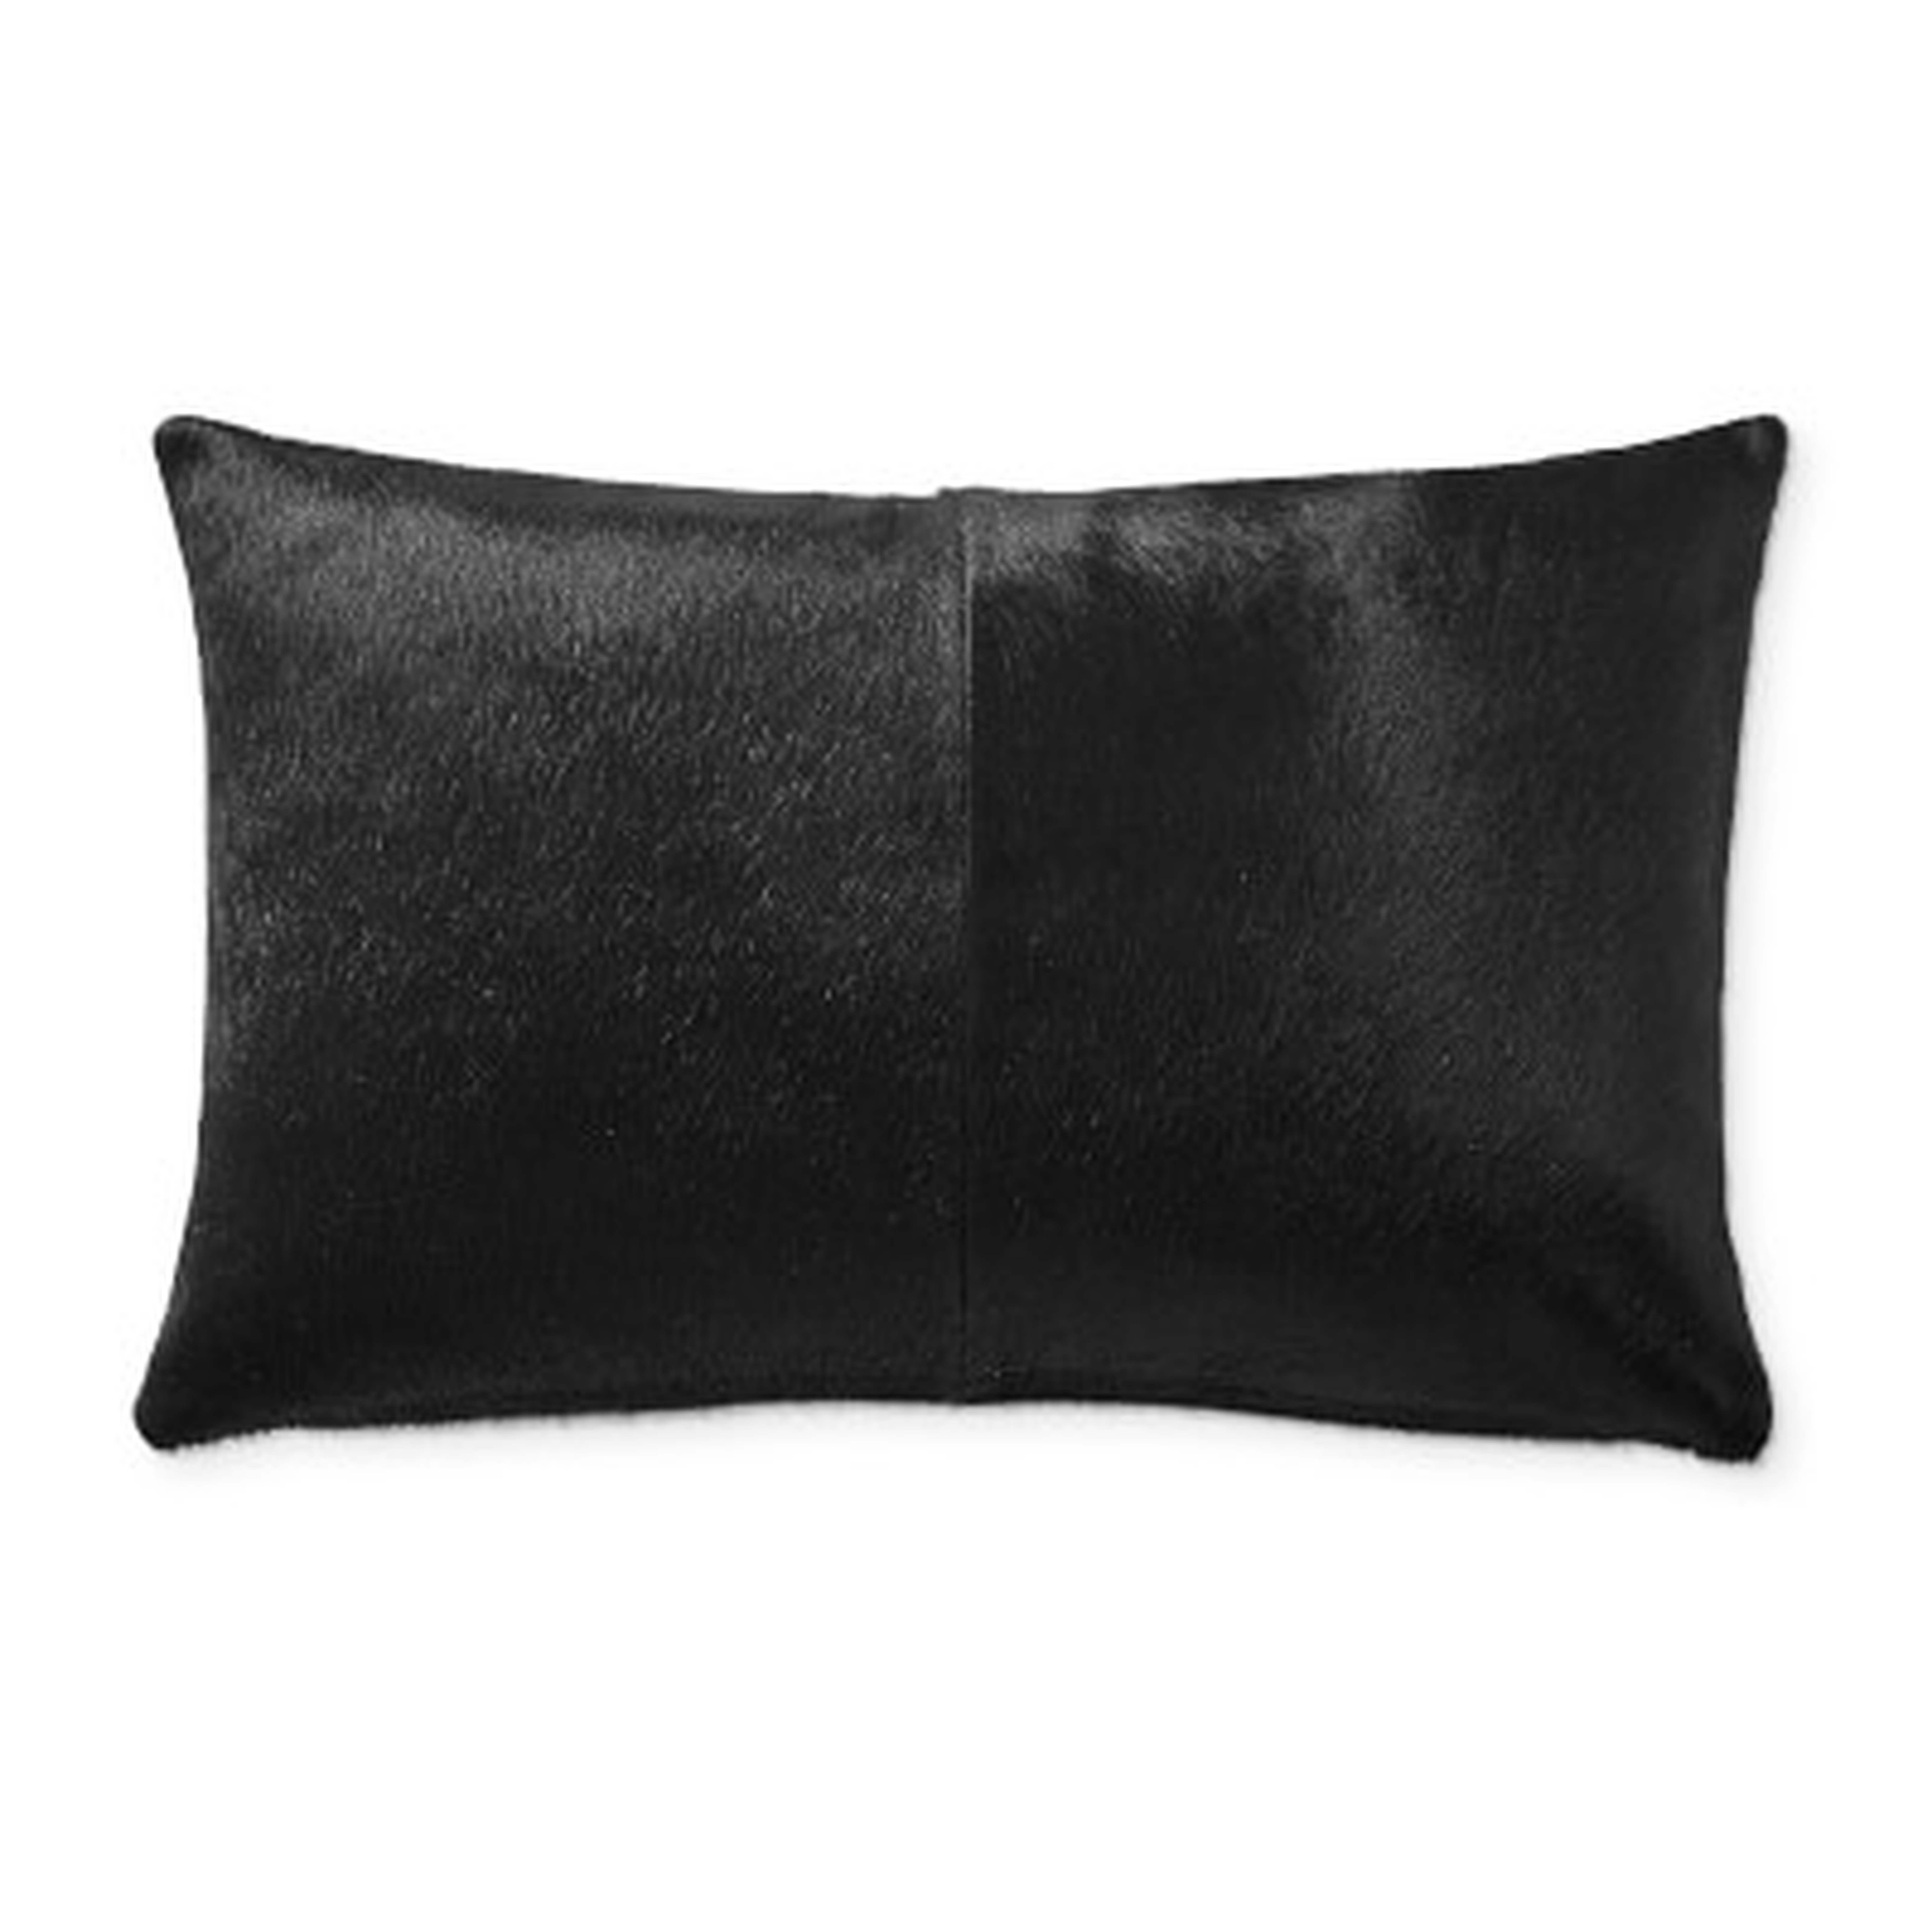 Solid Hide Pillow Cover, 14" X 22", Black - Williams Sonoma